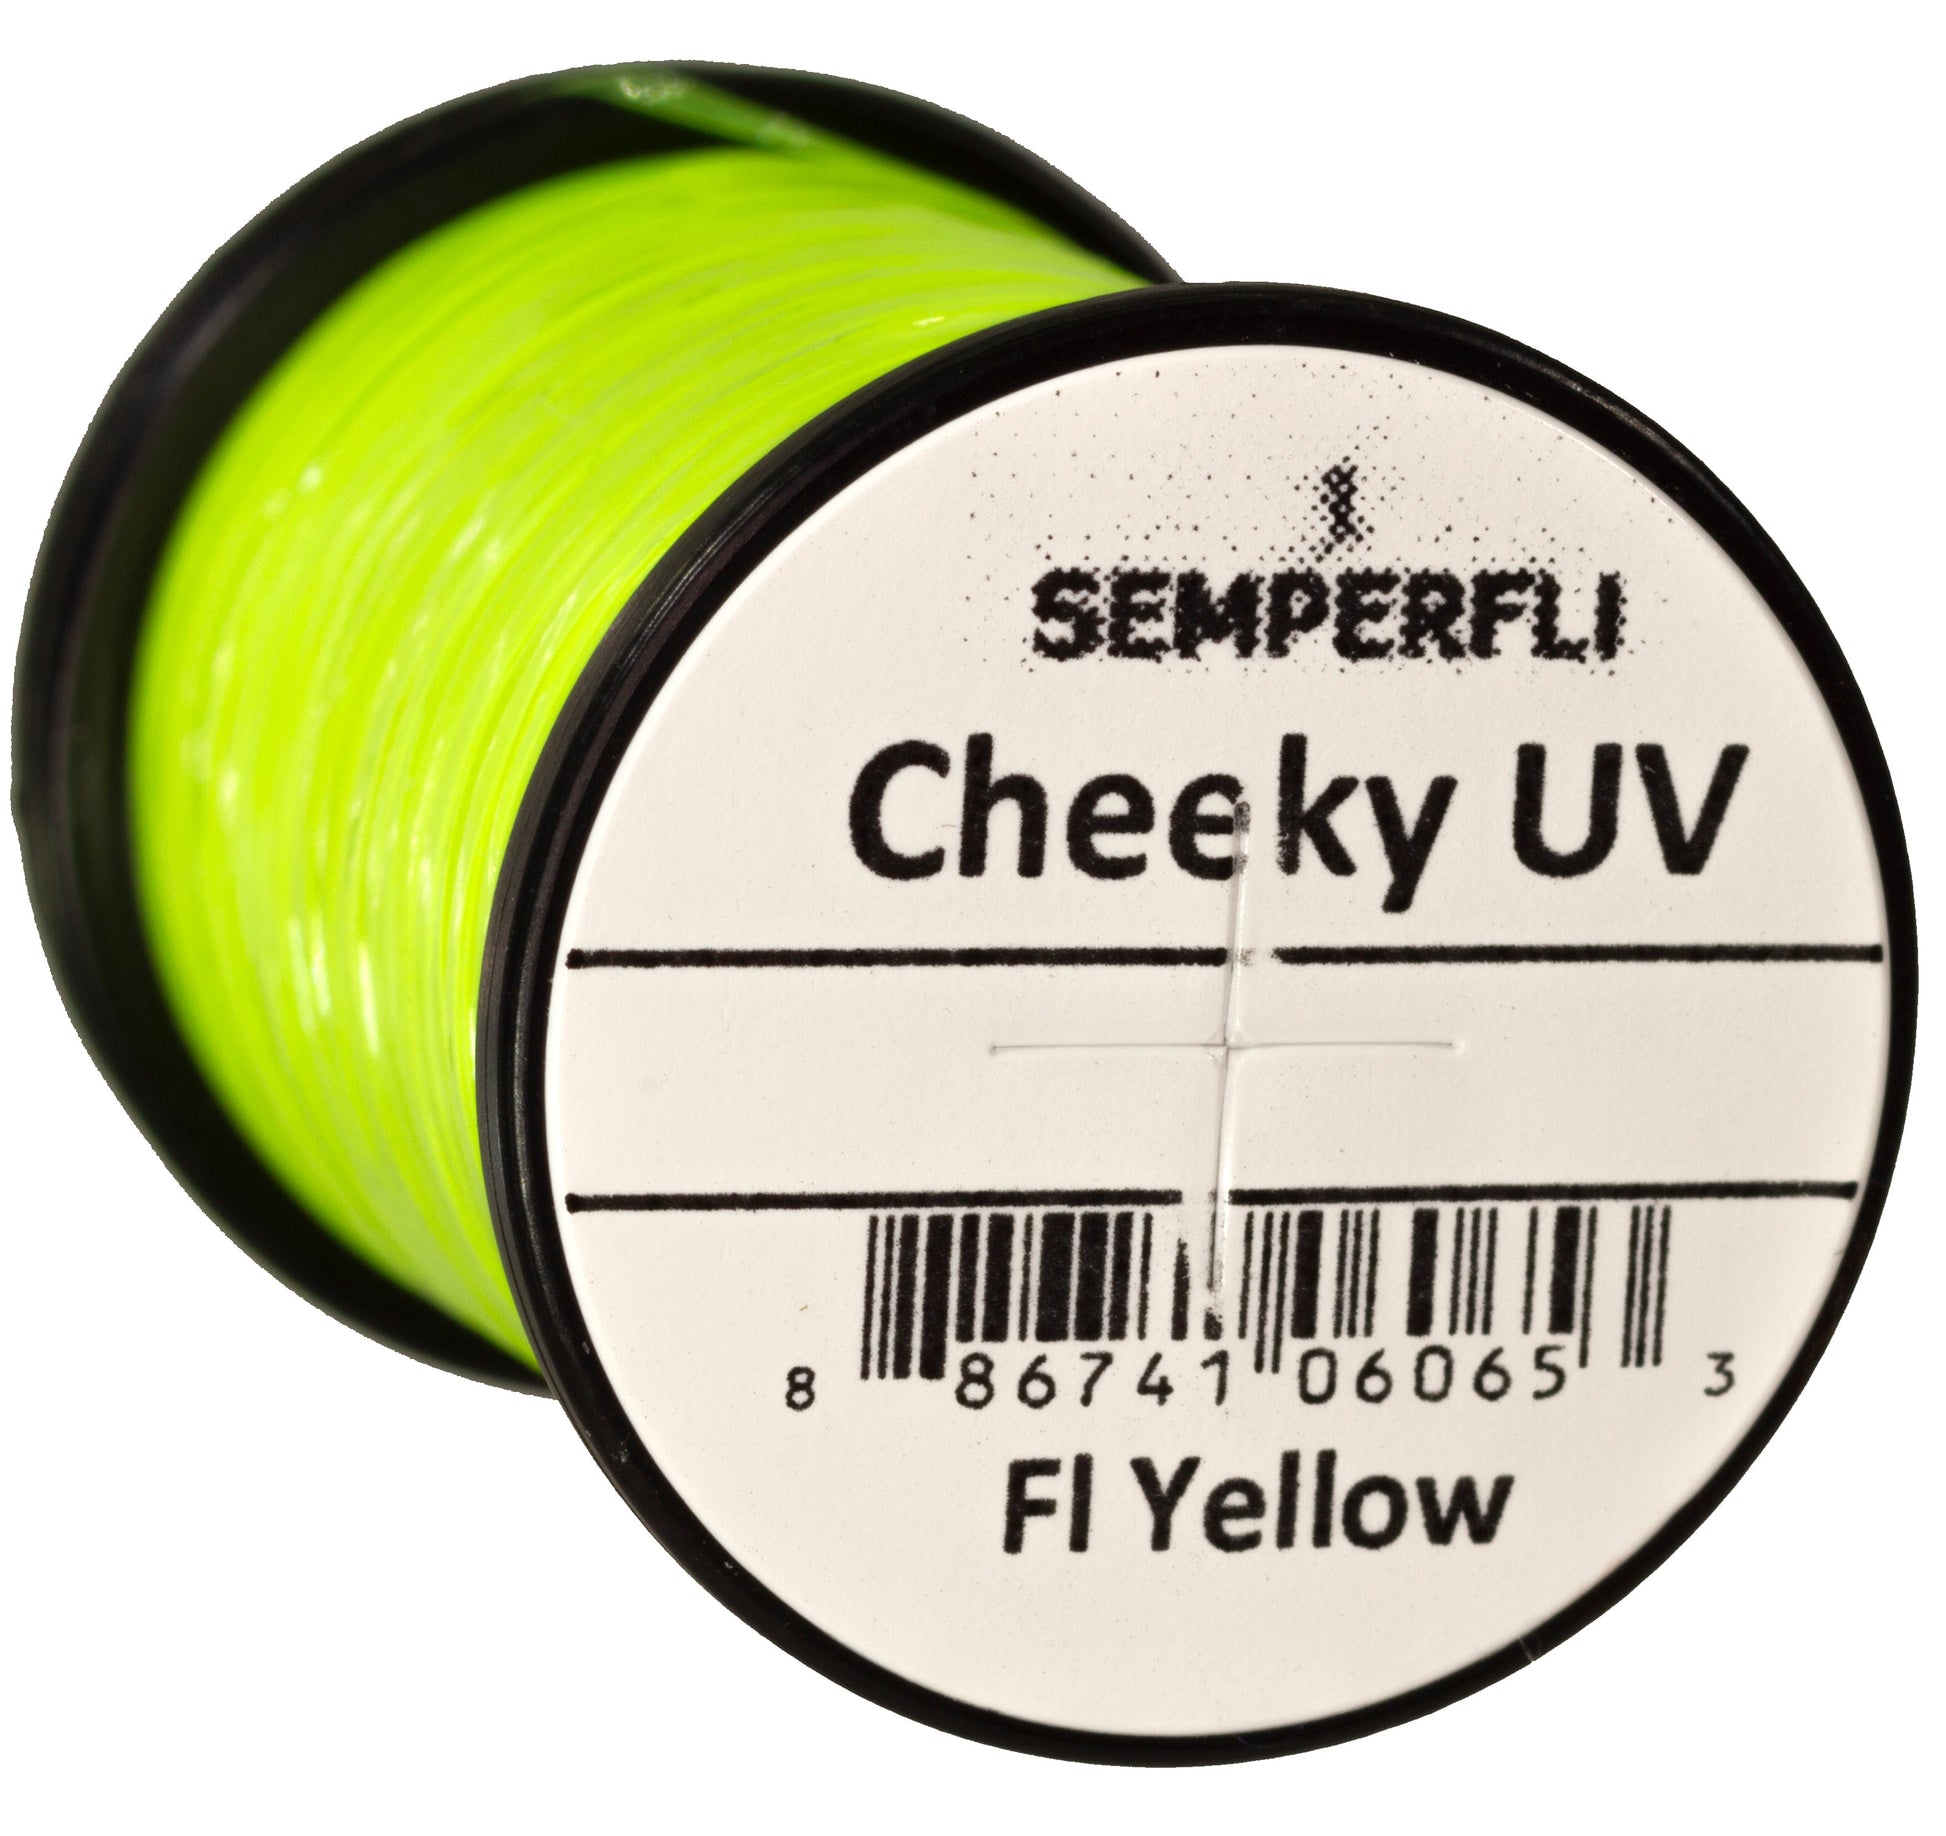 Semperfli Cheeky UV - Sportinglife Turangi 